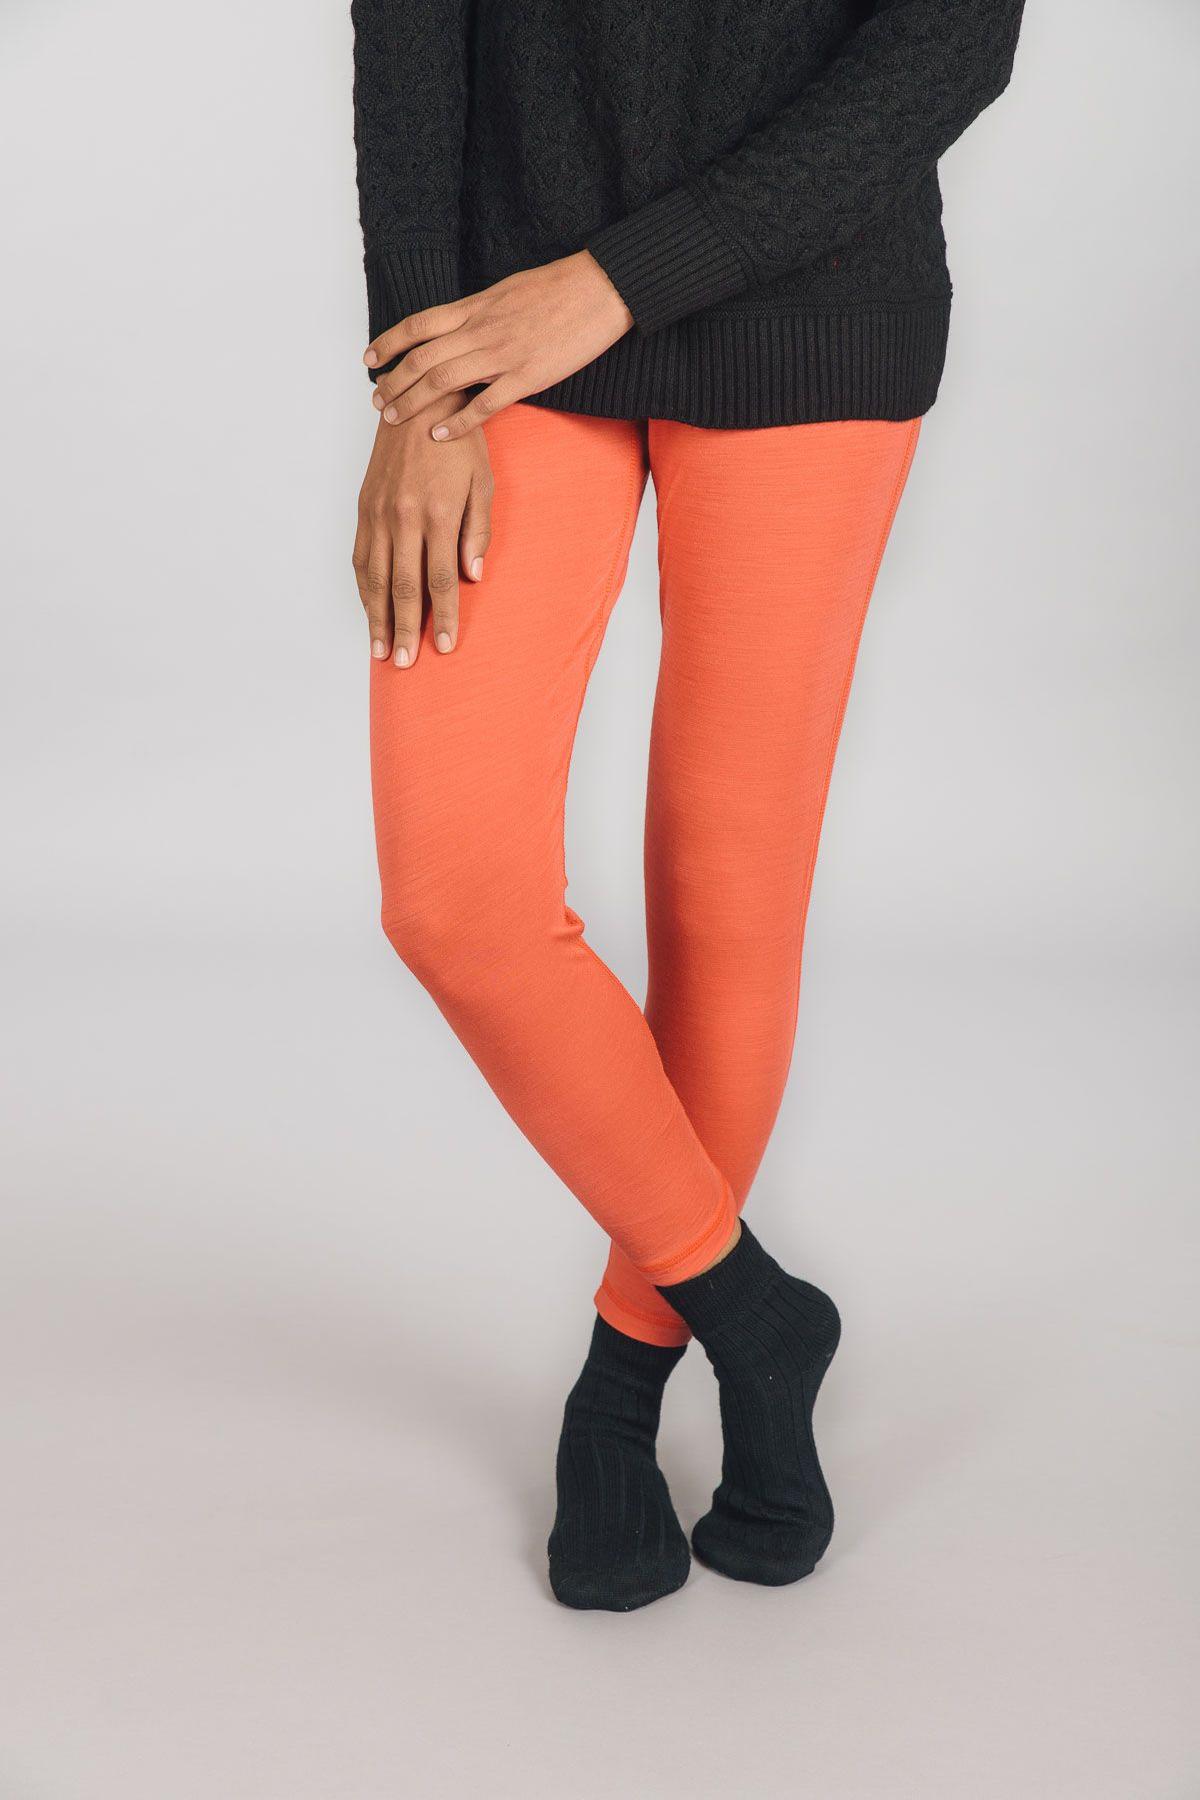 Buy Orange Leggings for Women by NIKE Online | Ajio.com